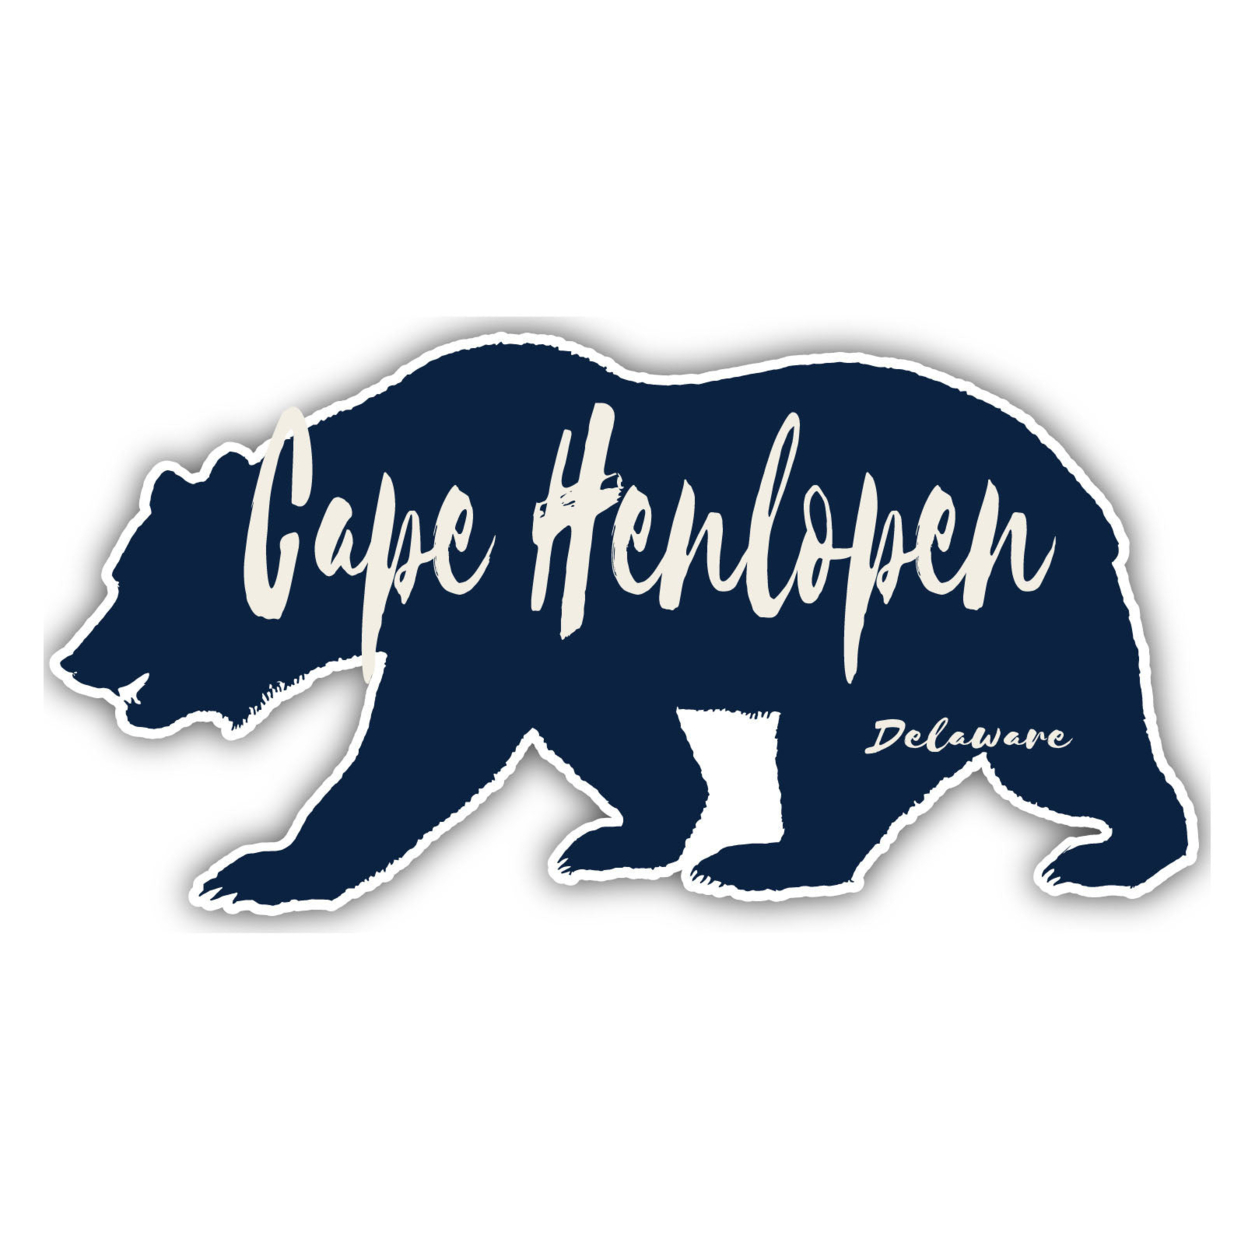 Cape Henlopen Delaware Souvenir Decorative Stickers (Choose Theme And Size) - Single Unit, 12-Inch, Bear